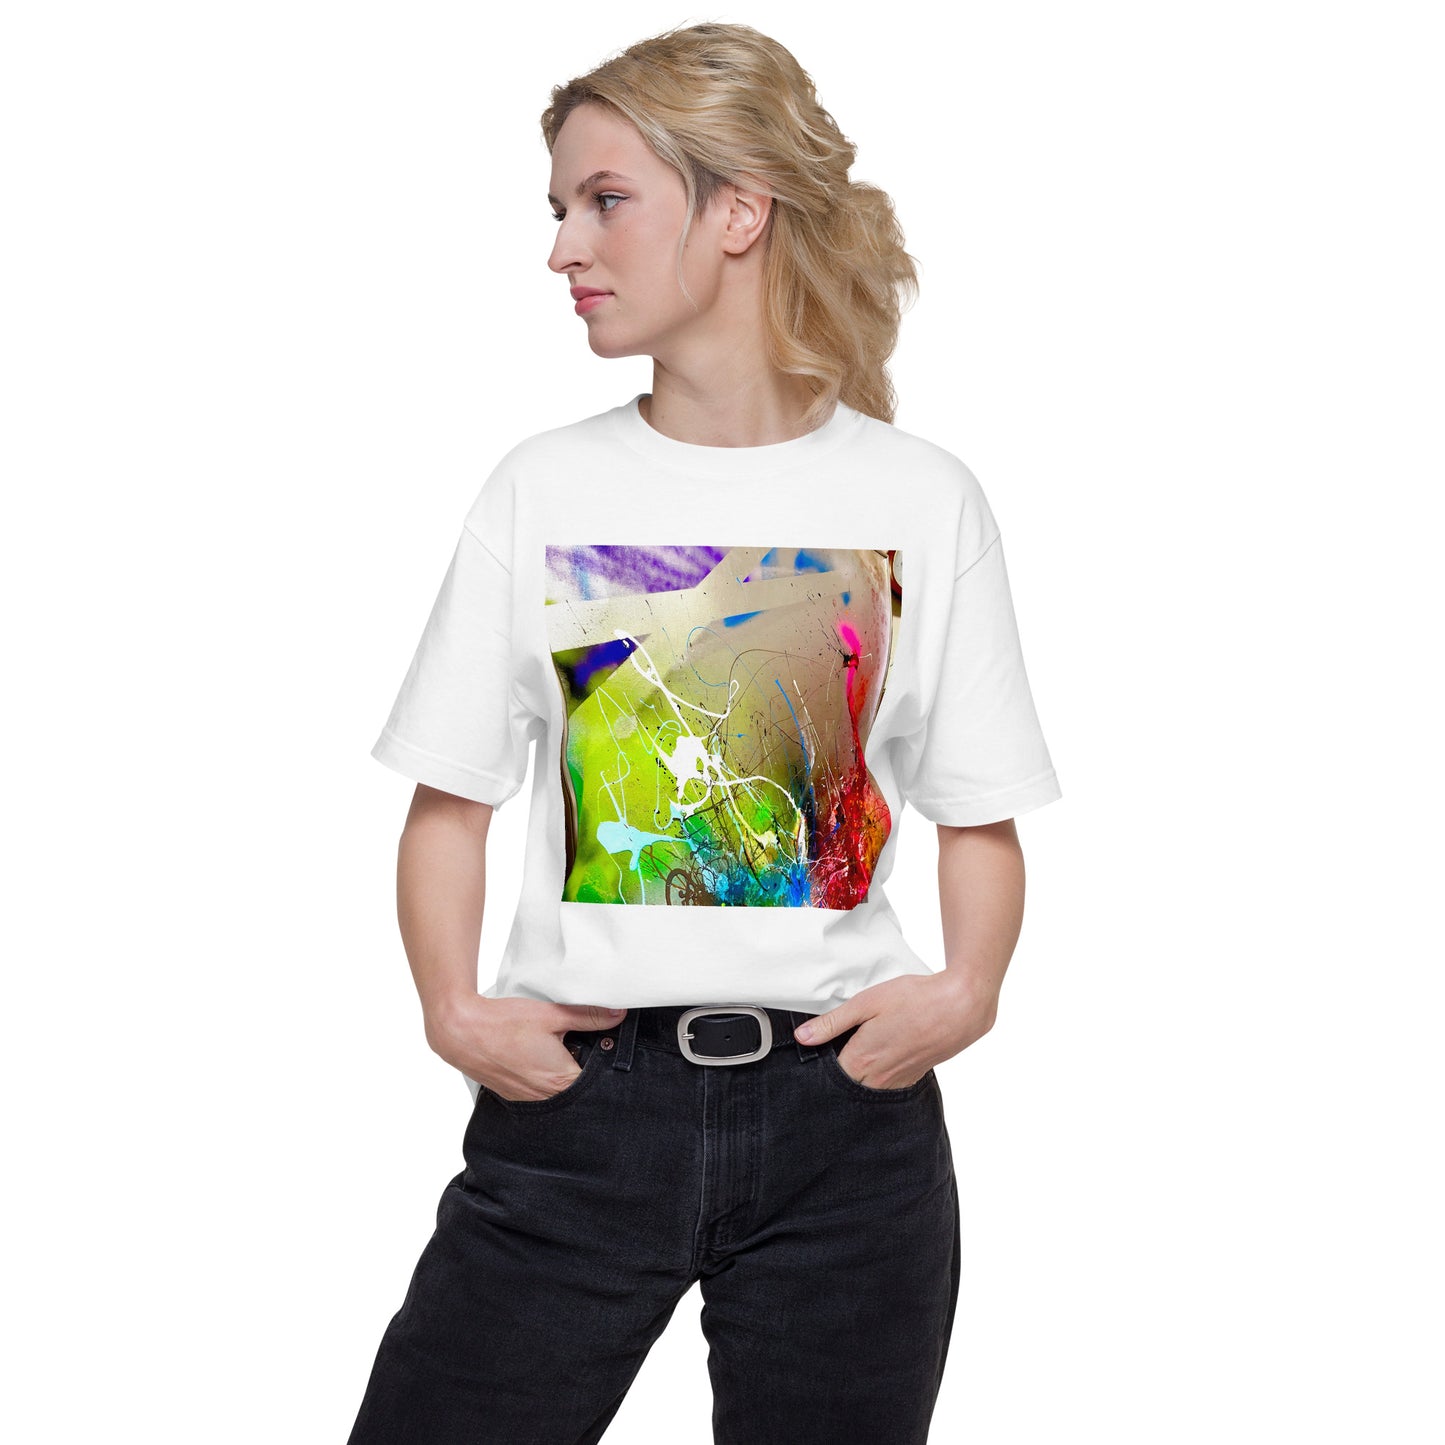 042-Art-Cise-4-前面プリントTシャツ-アートをデザイン